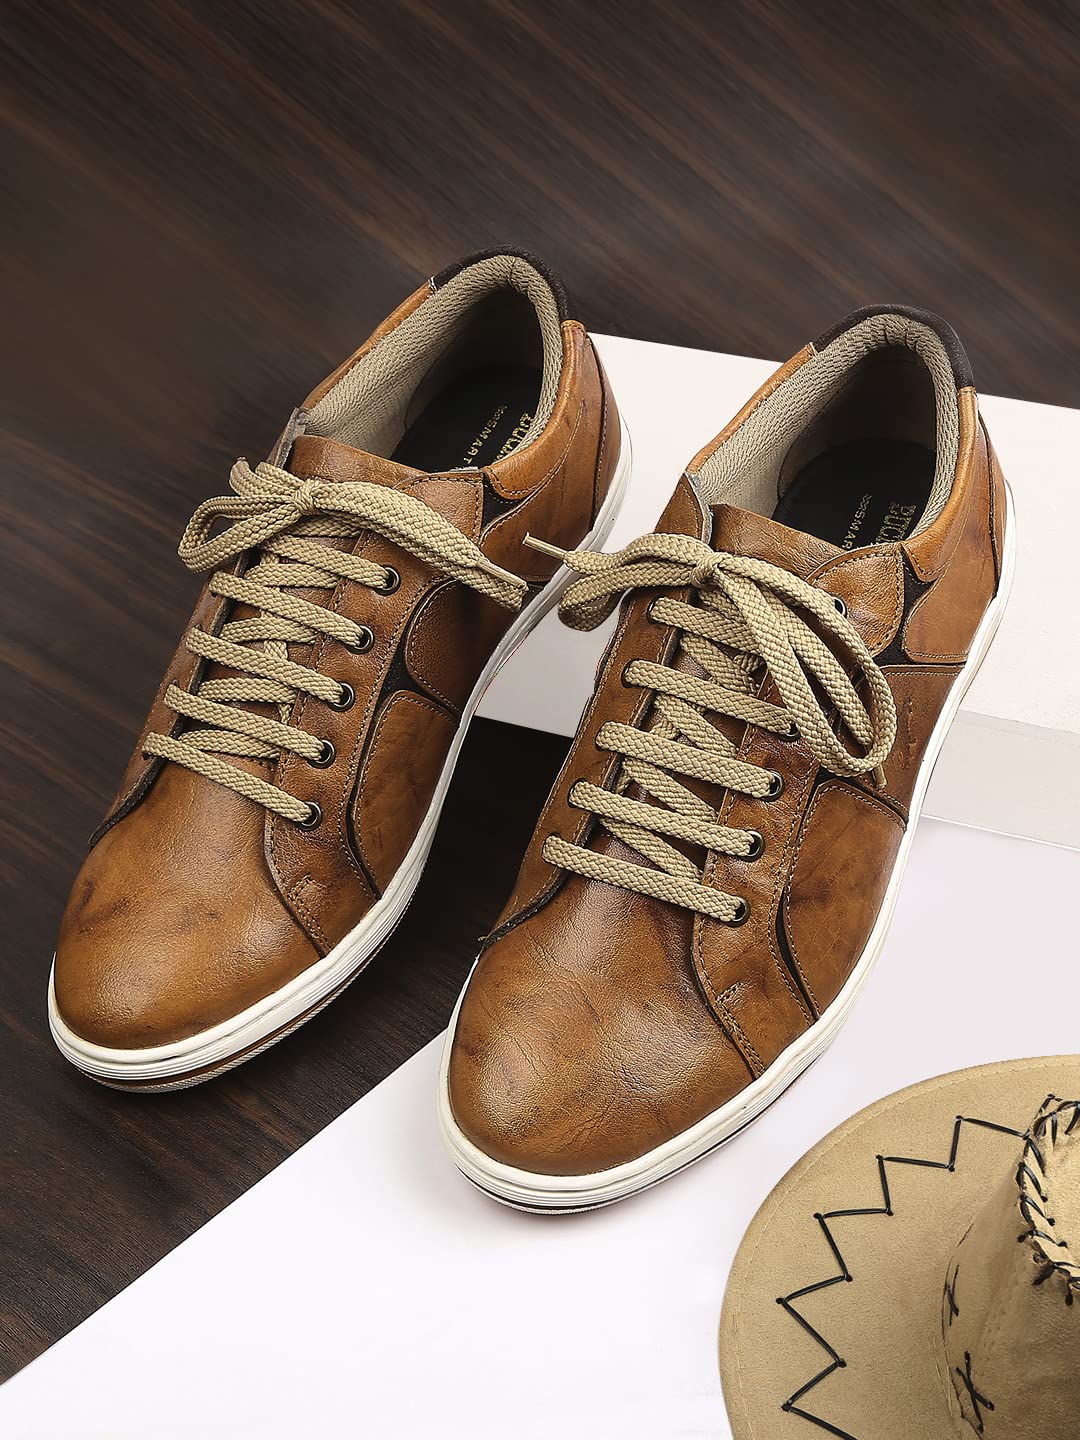 Buckaroo: Miller FullGrain Natural Leather Tan Casual Shoes for Mens 